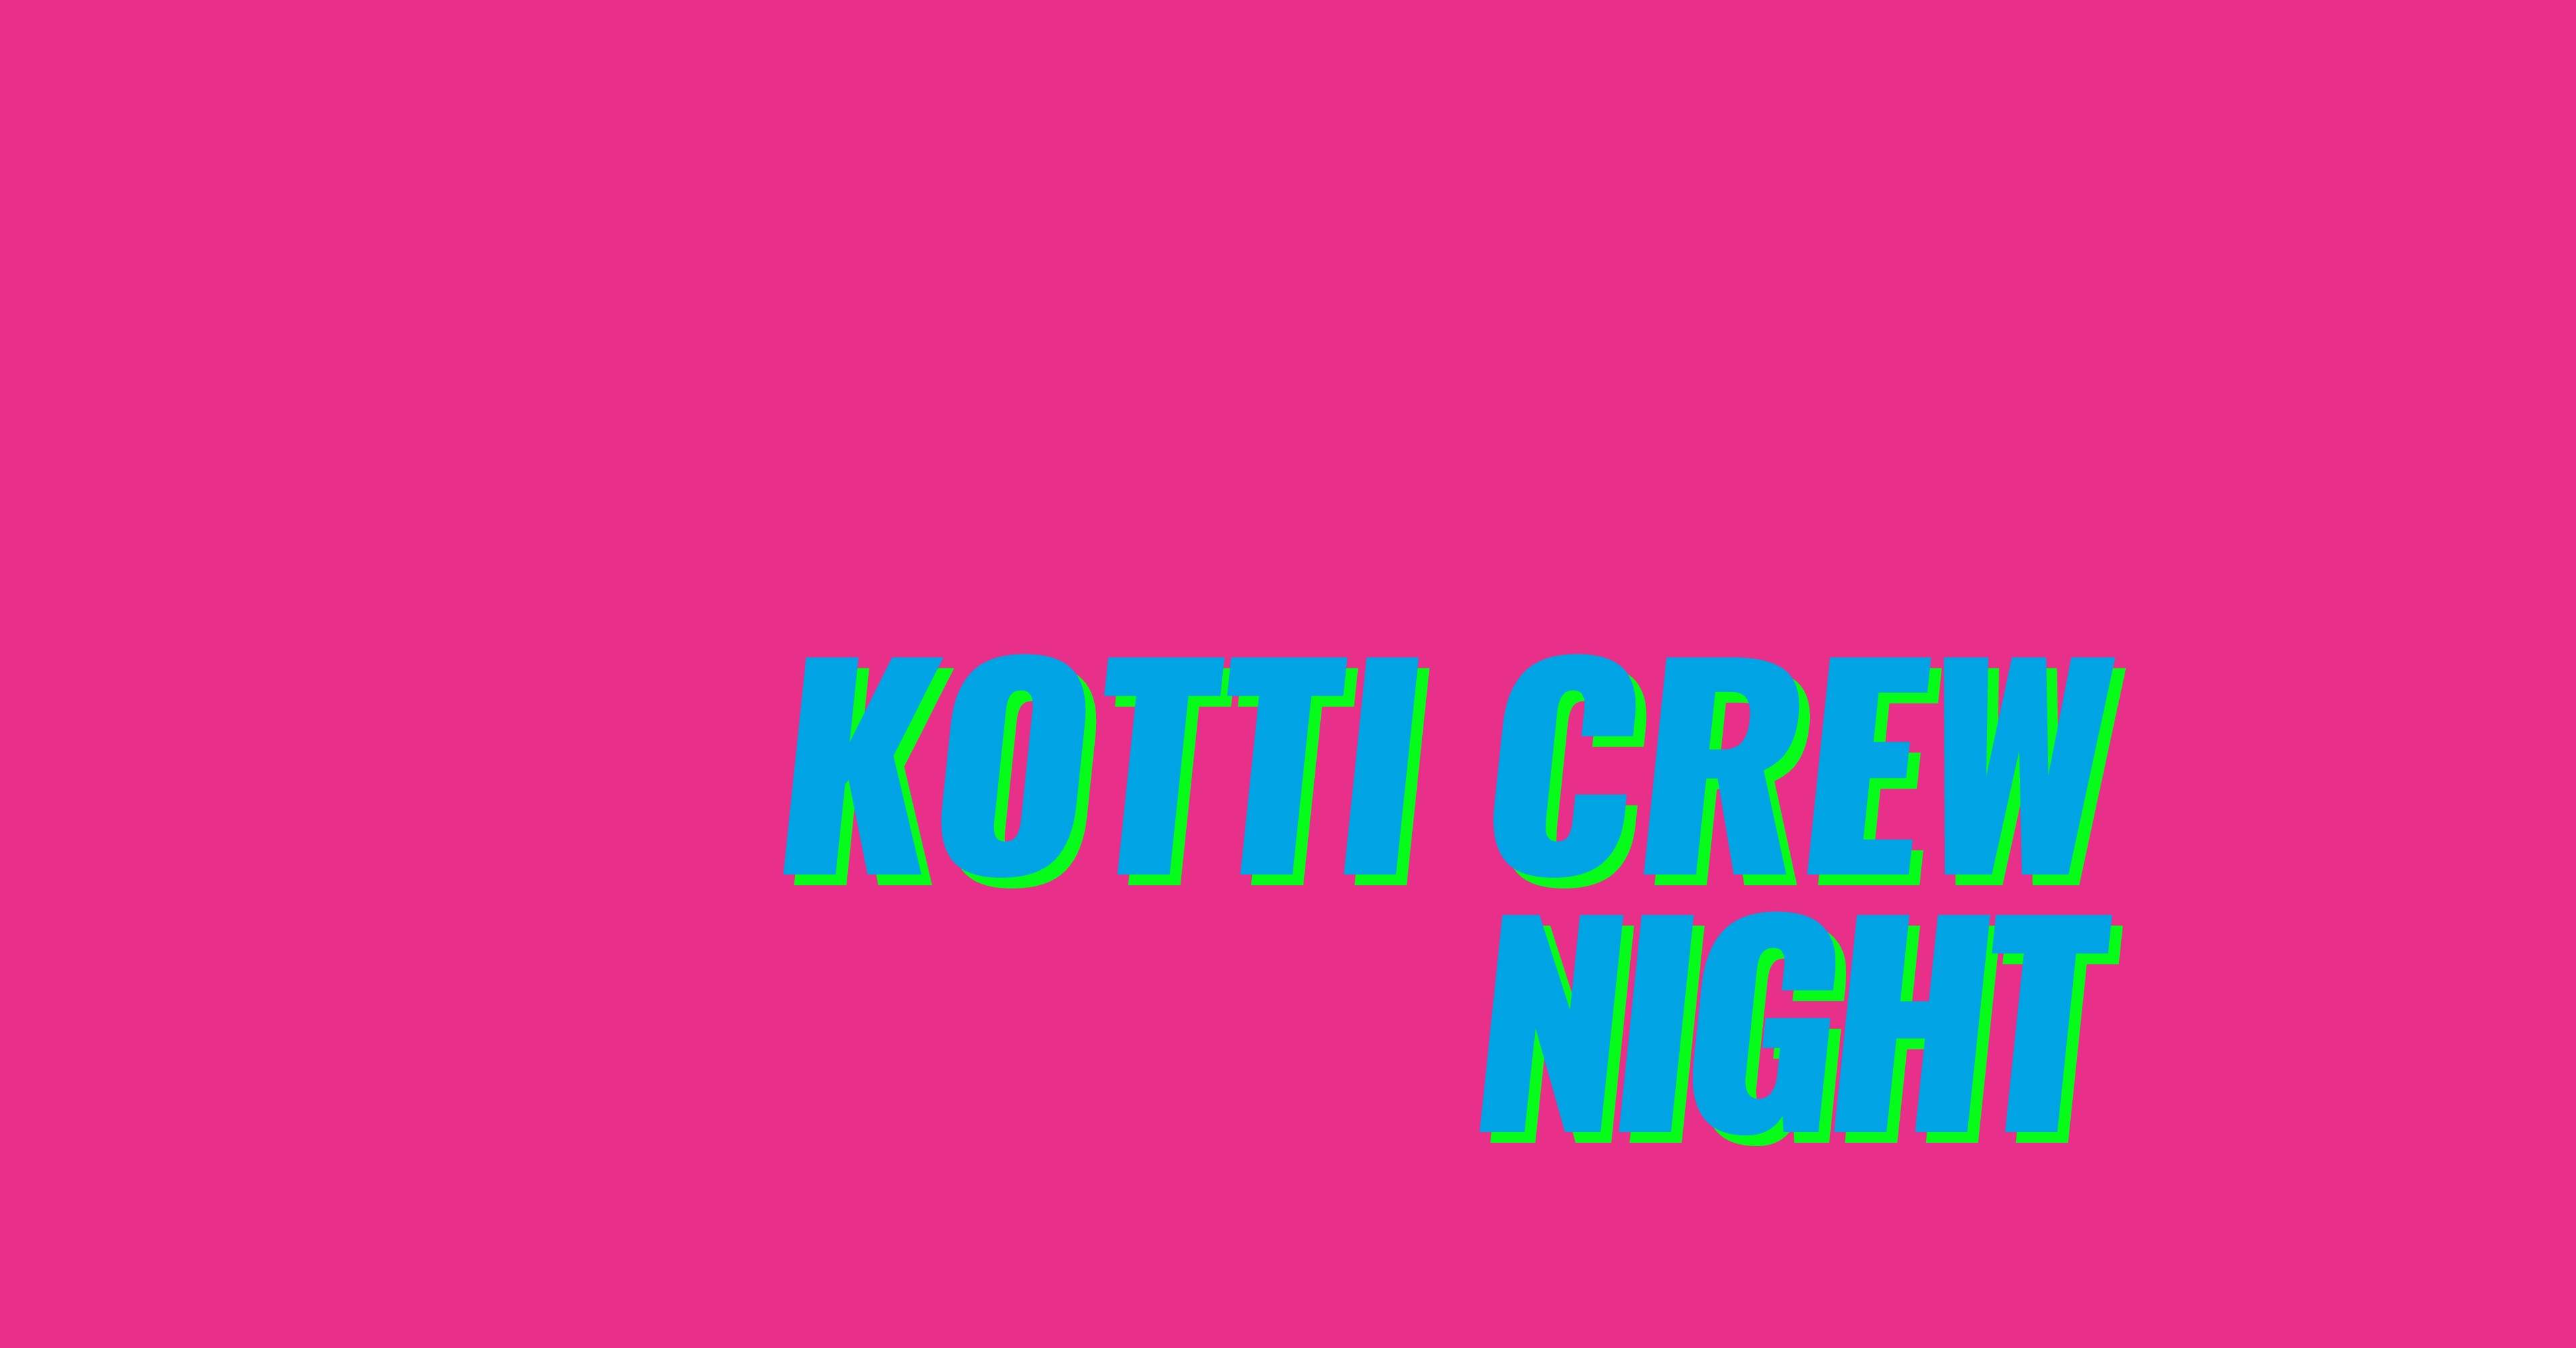 Kotti Crew Night - Flyer front